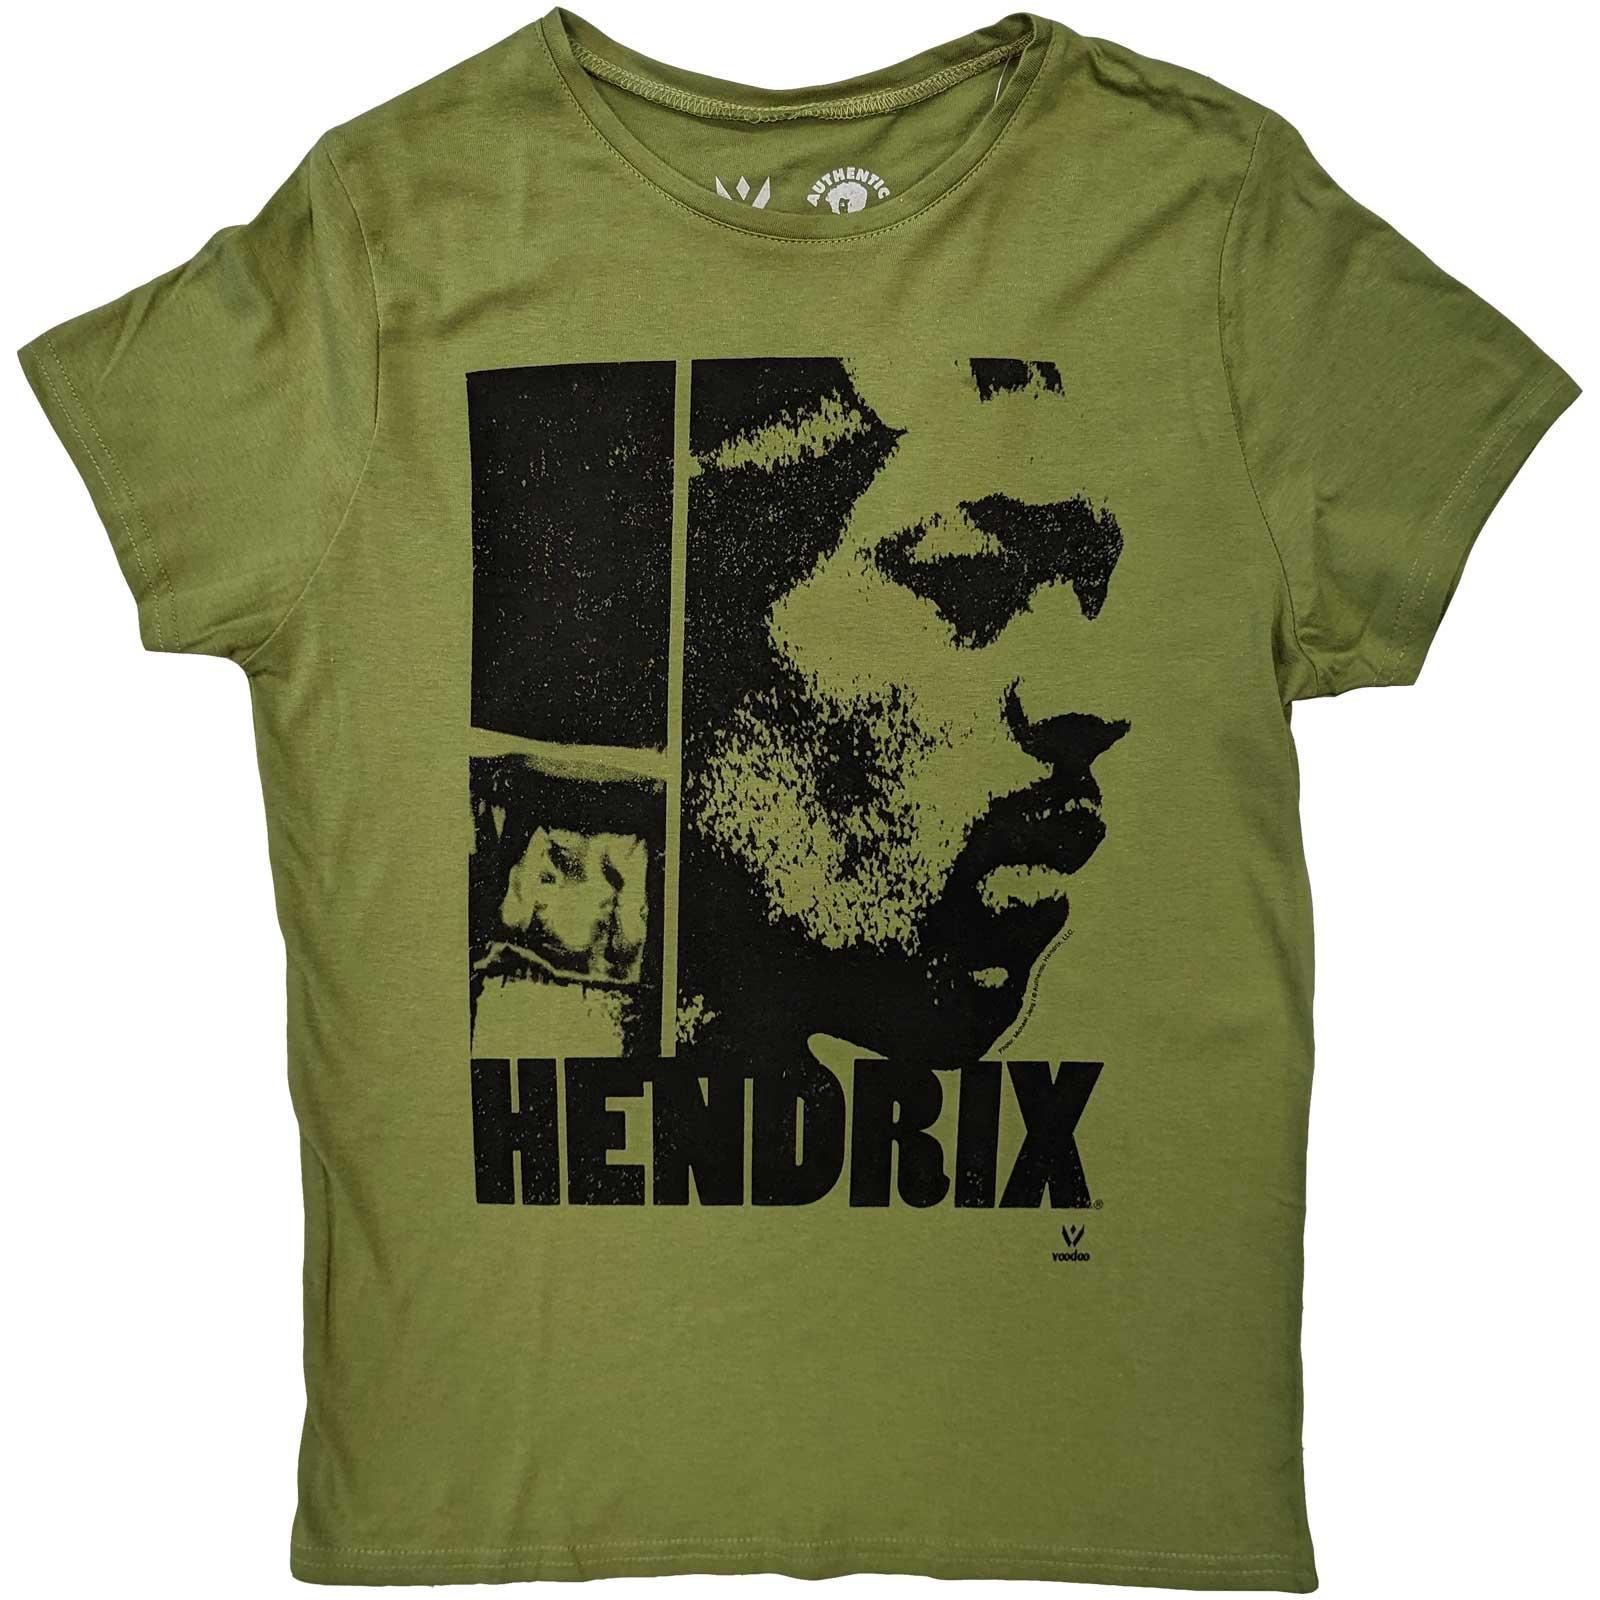 Let Me Live Tshirt Damen Grün XXL von Jimi Hendrix